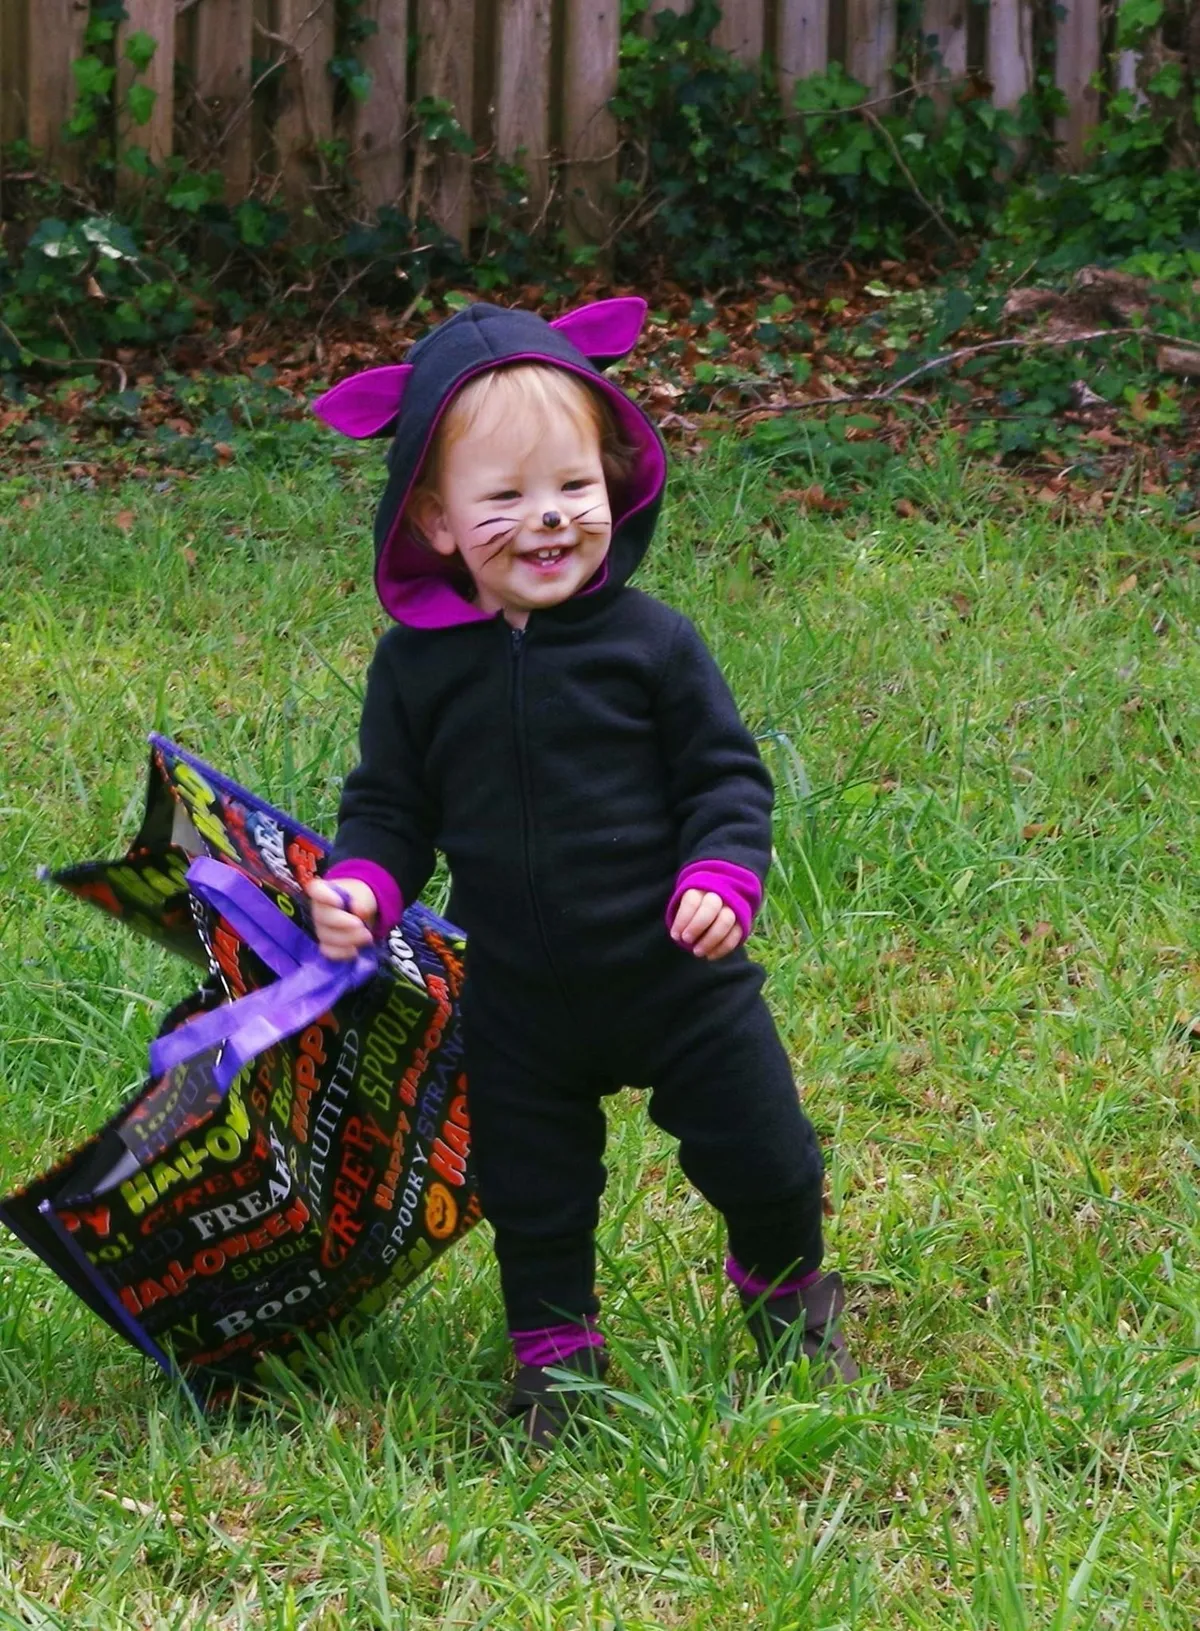 Easy DIY Halloween costumes – kids' cosplay suit